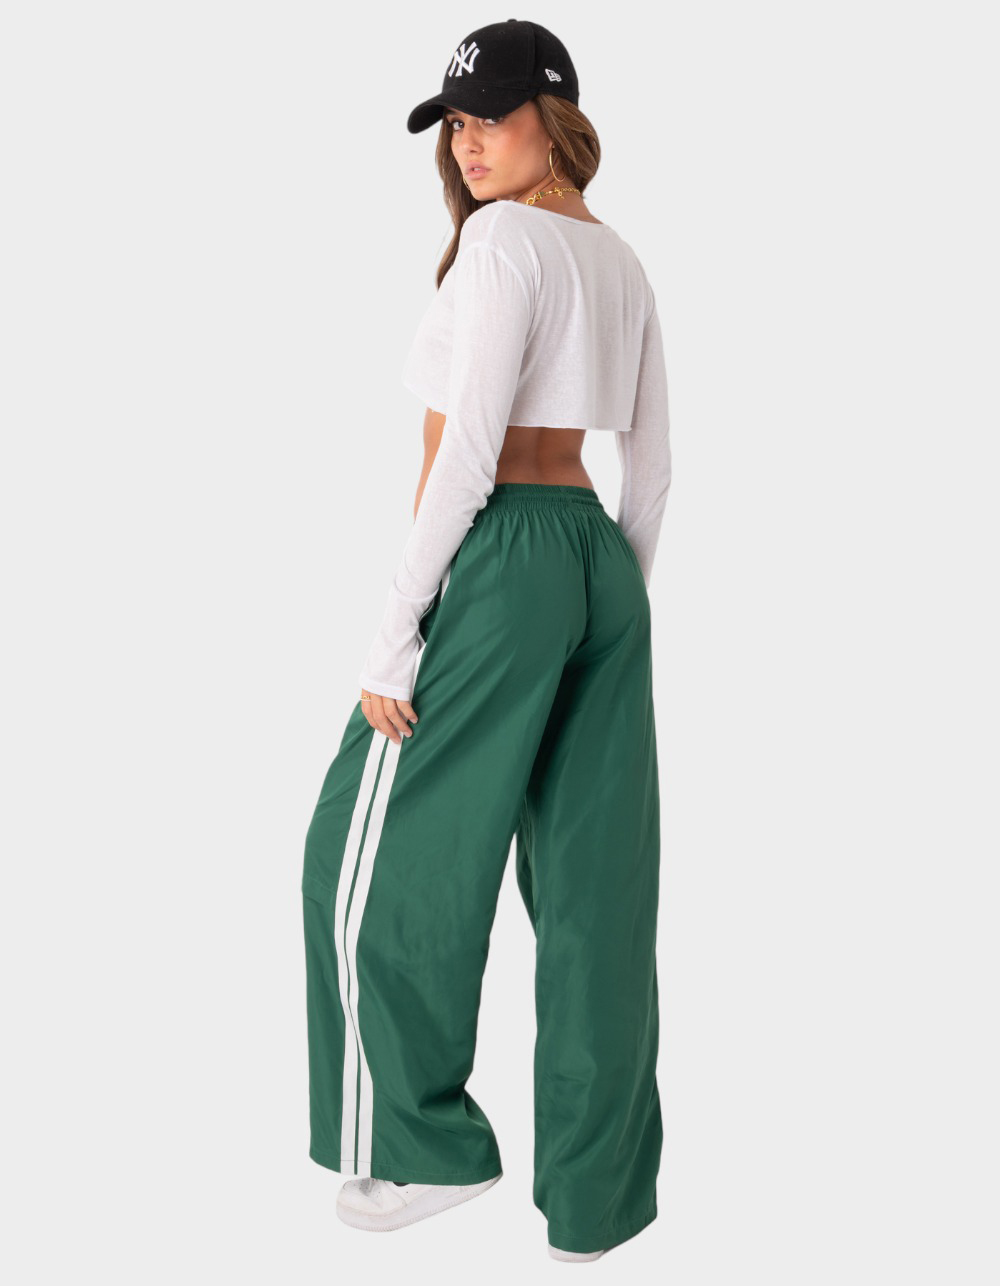 Geifa Striped Women Green Track Pants - Buy Geifa Striped Women